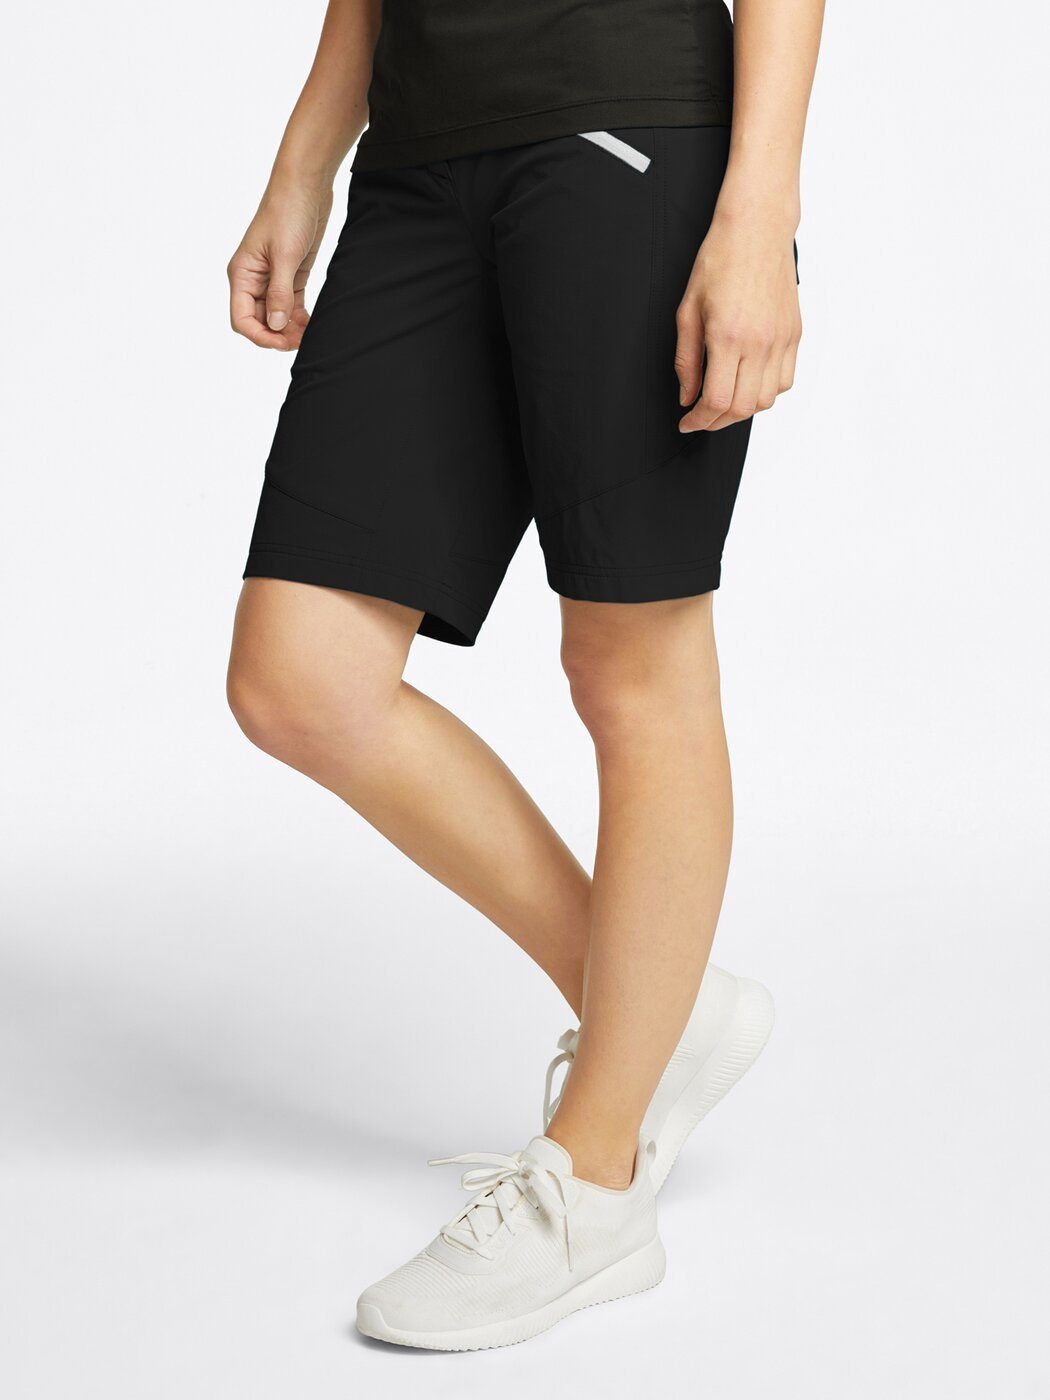 Shorts X-Function lady 1201 NASITA black.white (shorts) Ziener